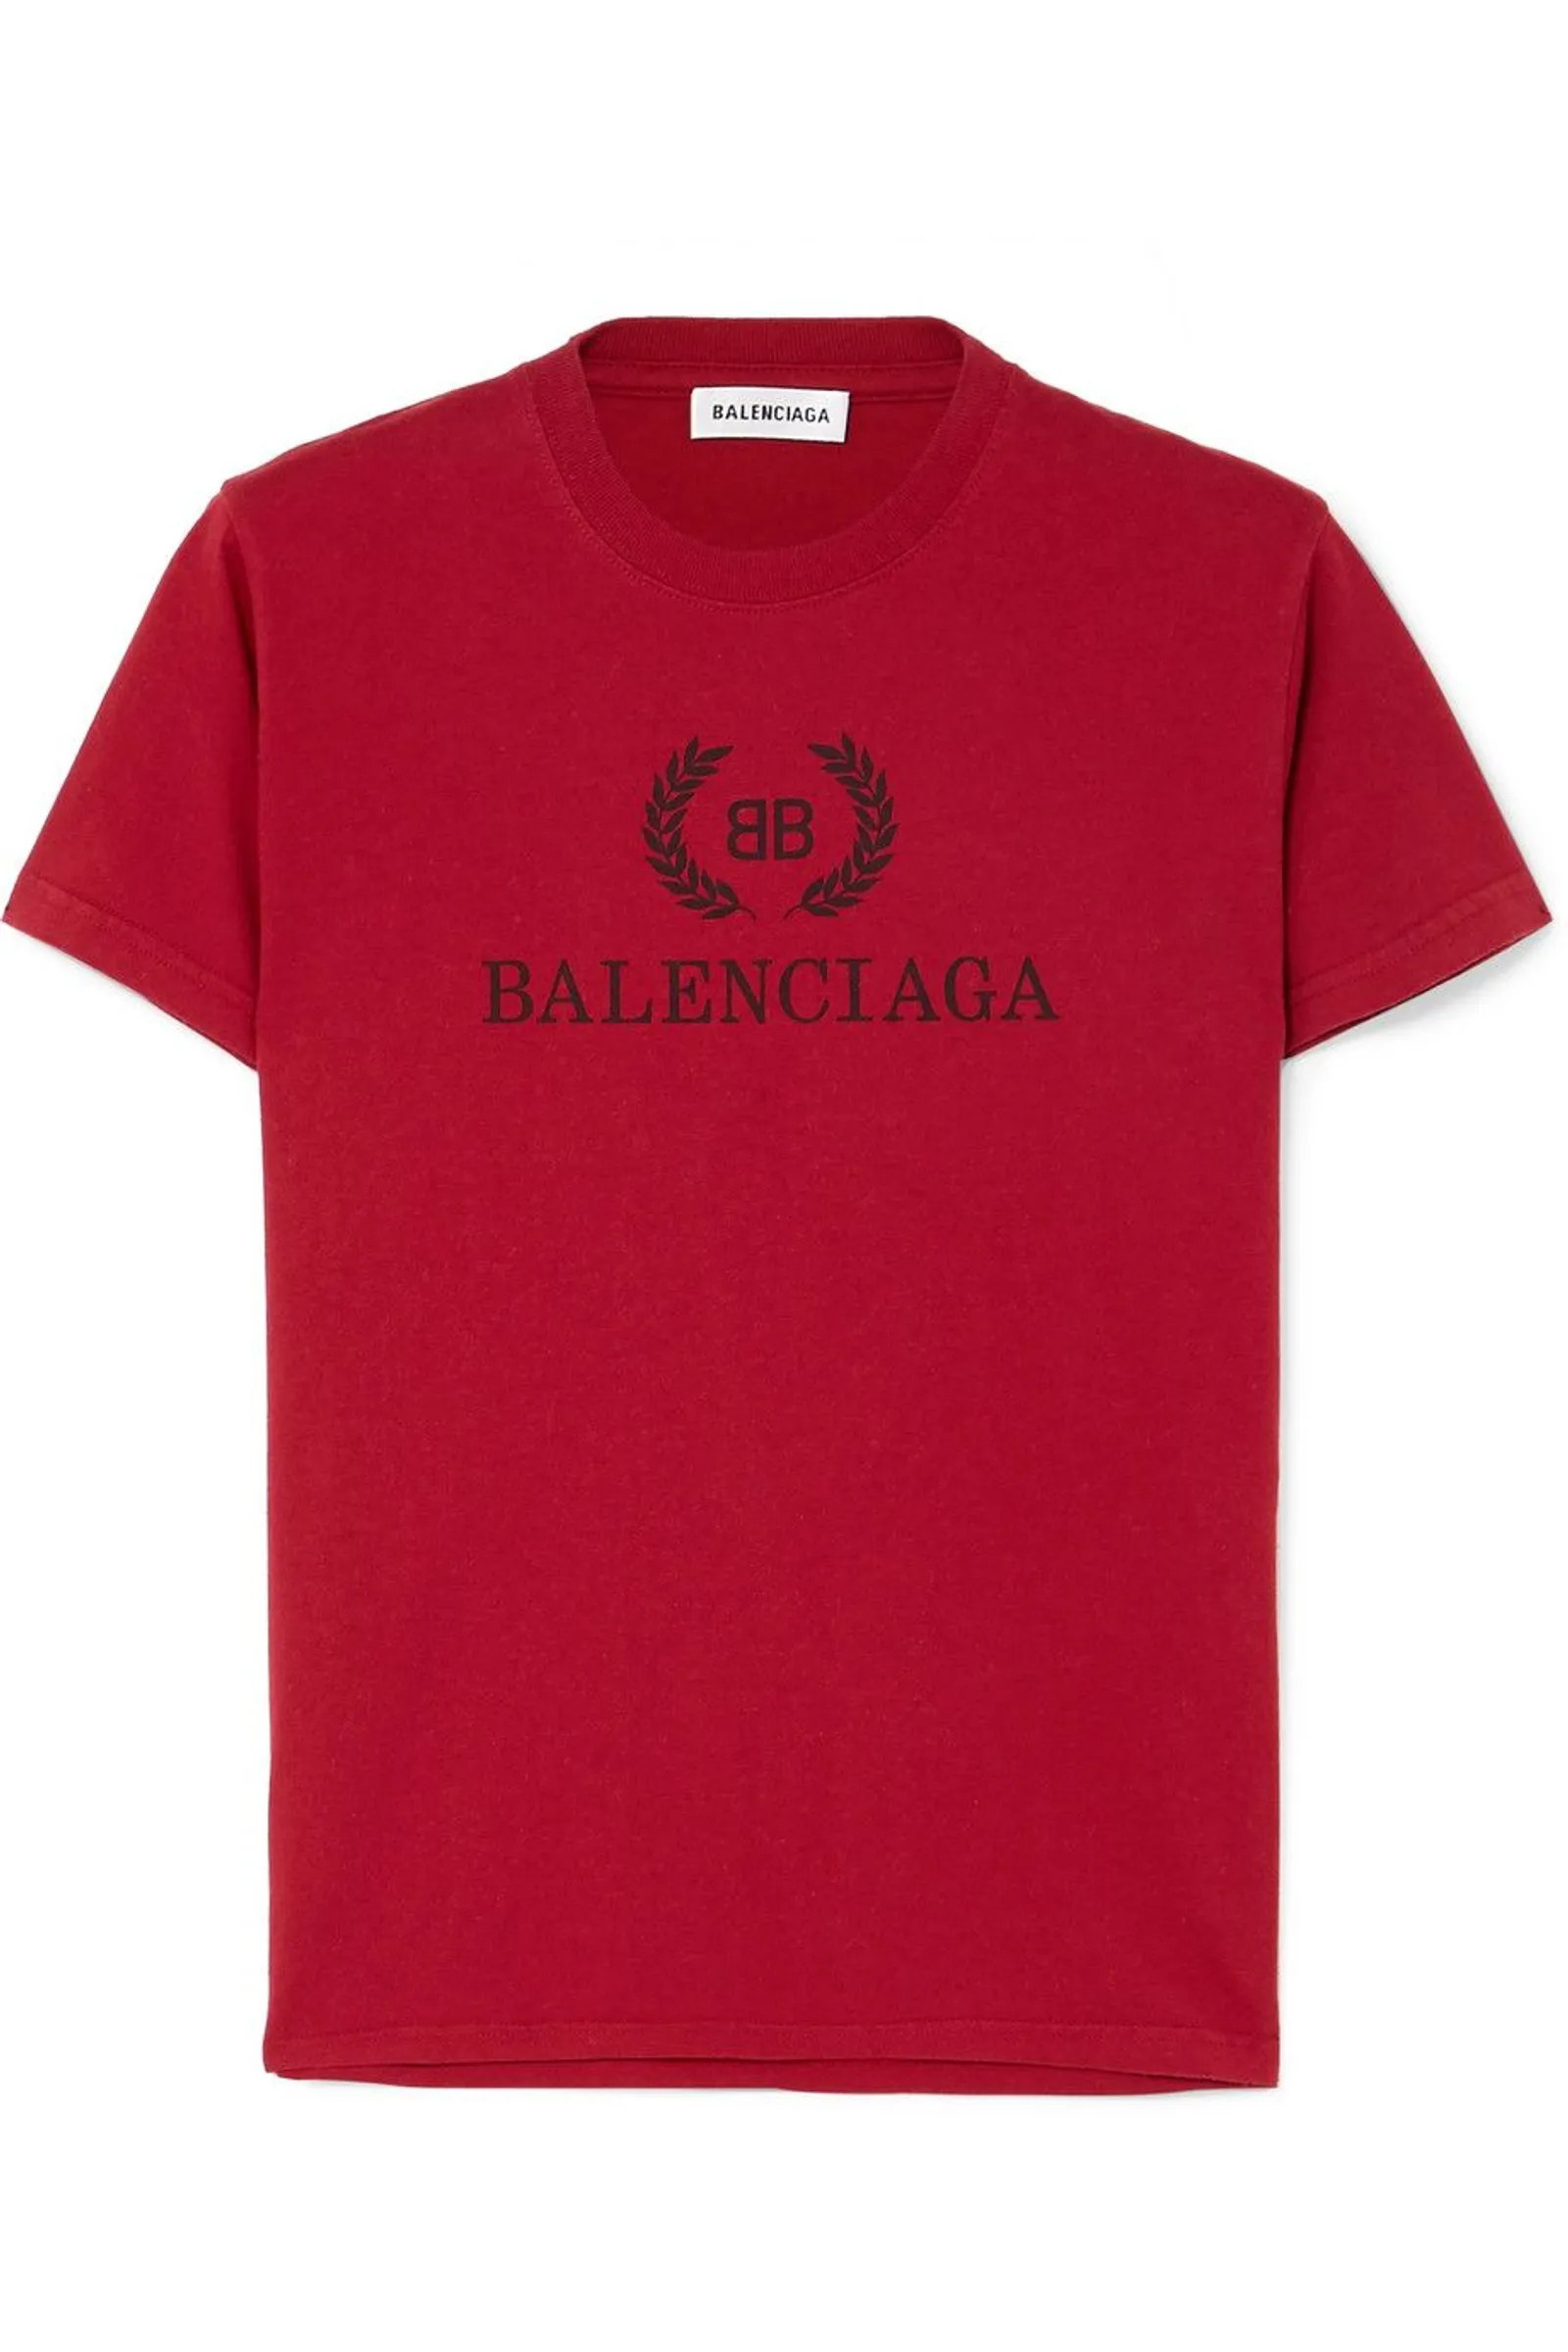 #PopbelaOOTD: T-shirt Desainer untuk Gaya Kasual